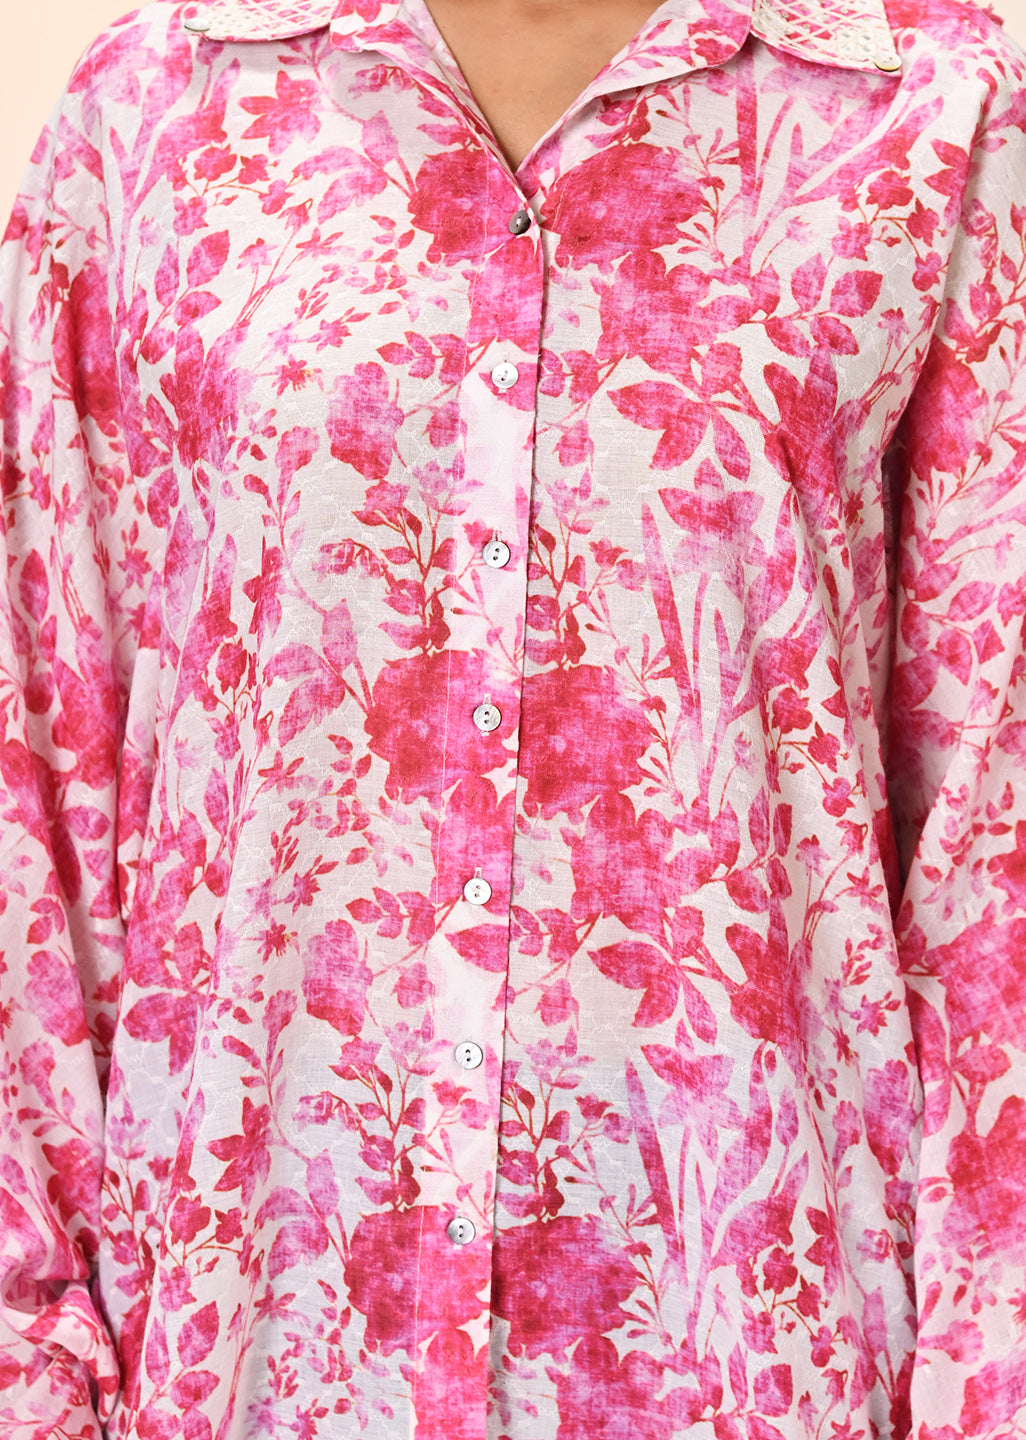 Noora Rouge Pink Printed Cotton Shirt for Women